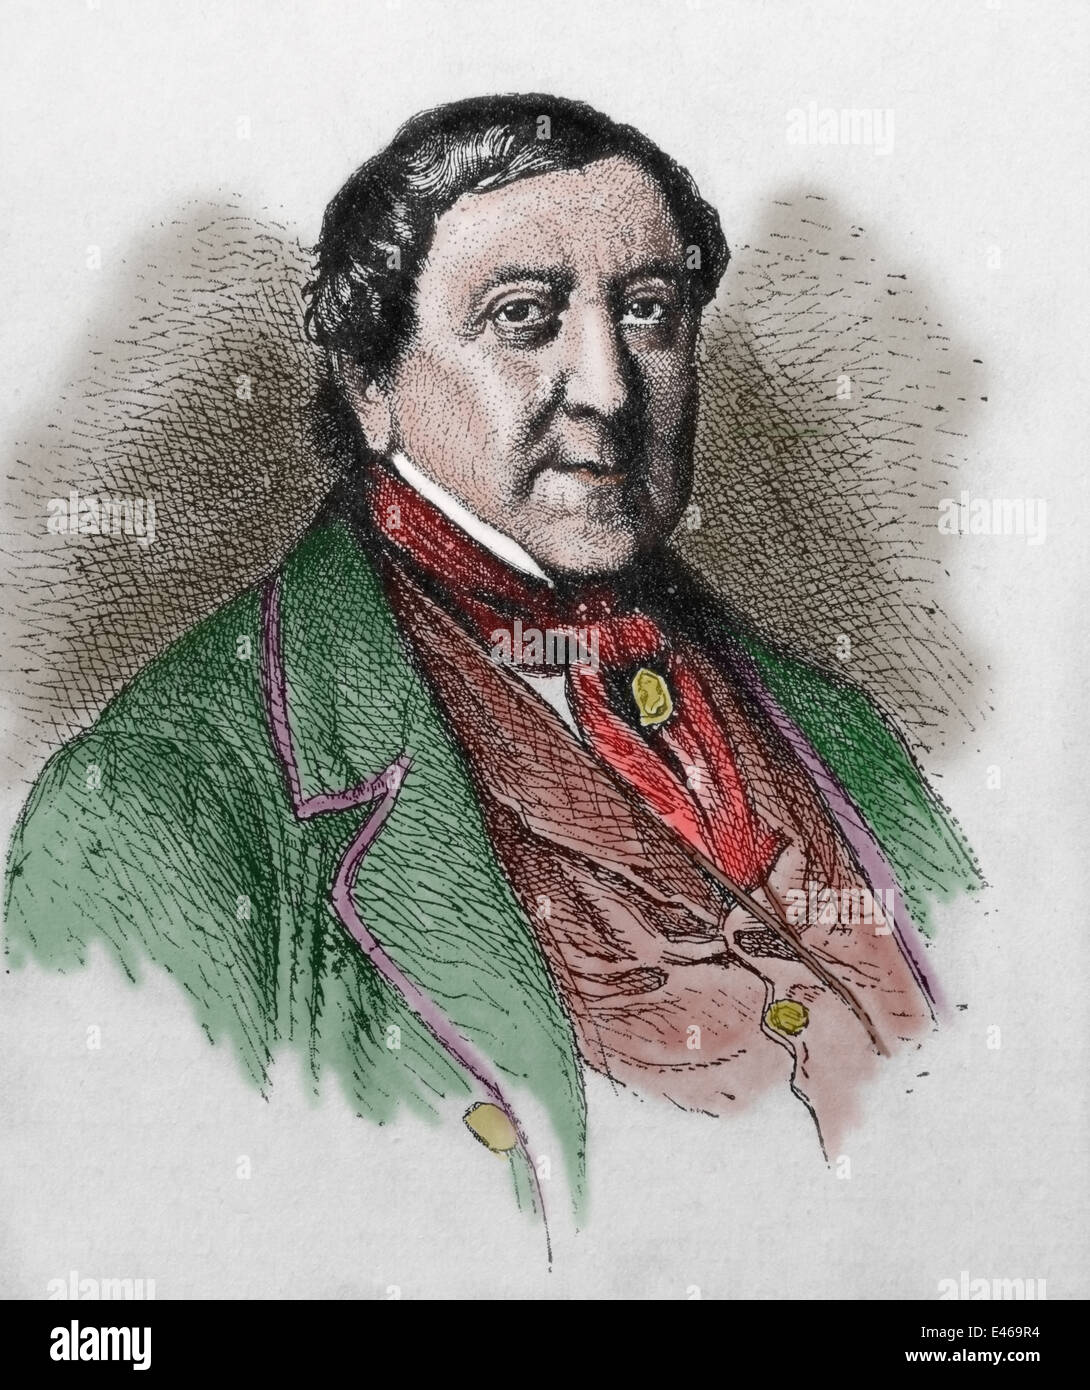 Gioachino Rossini (1792-1868). Italian composer. Engraving, 1917. Later colouration. Stock Photo